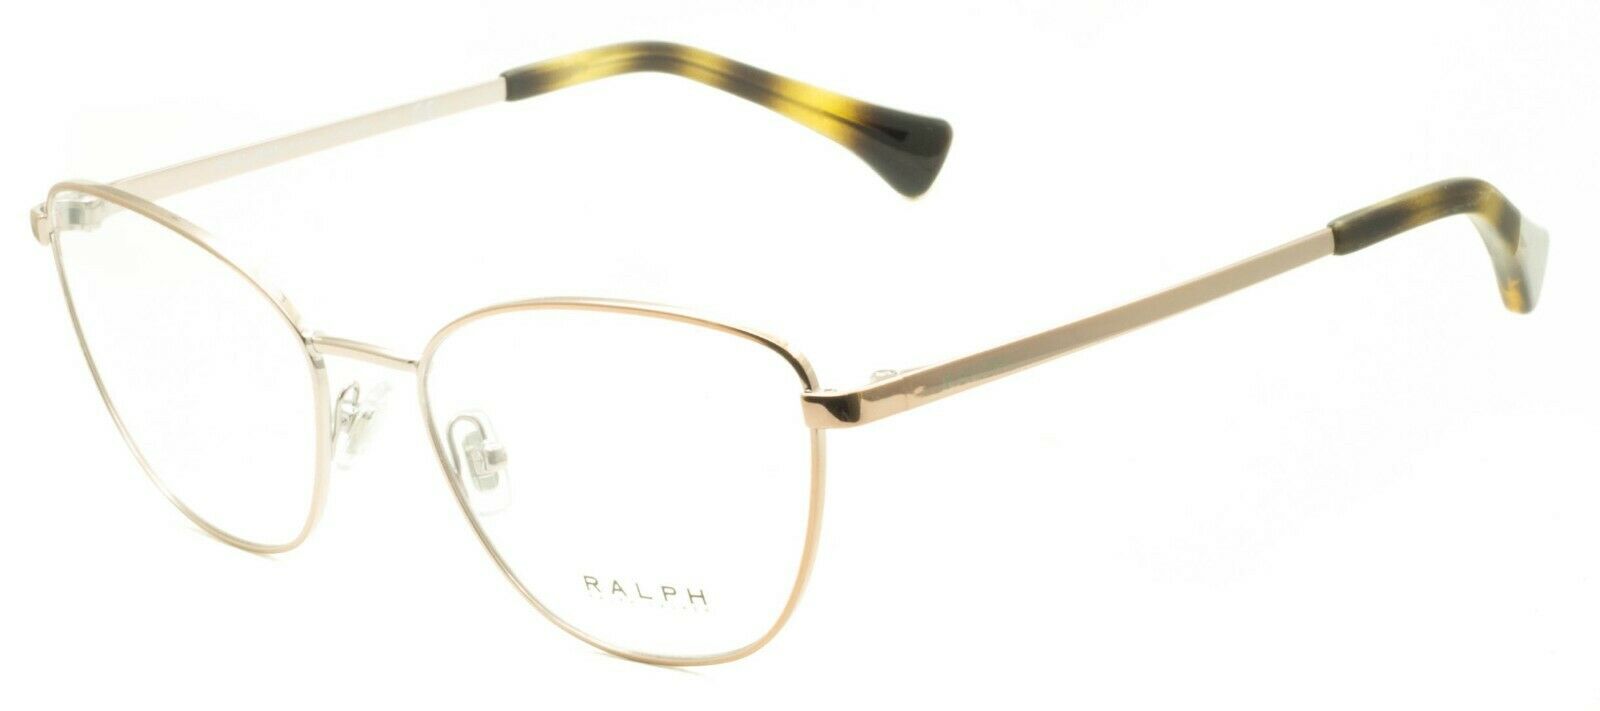 RALPH LAUREN RA 6046 9095 53mm RX Optical Eyewear FRAMES Eyeglasses Glasses  -New - GGV Eyewear